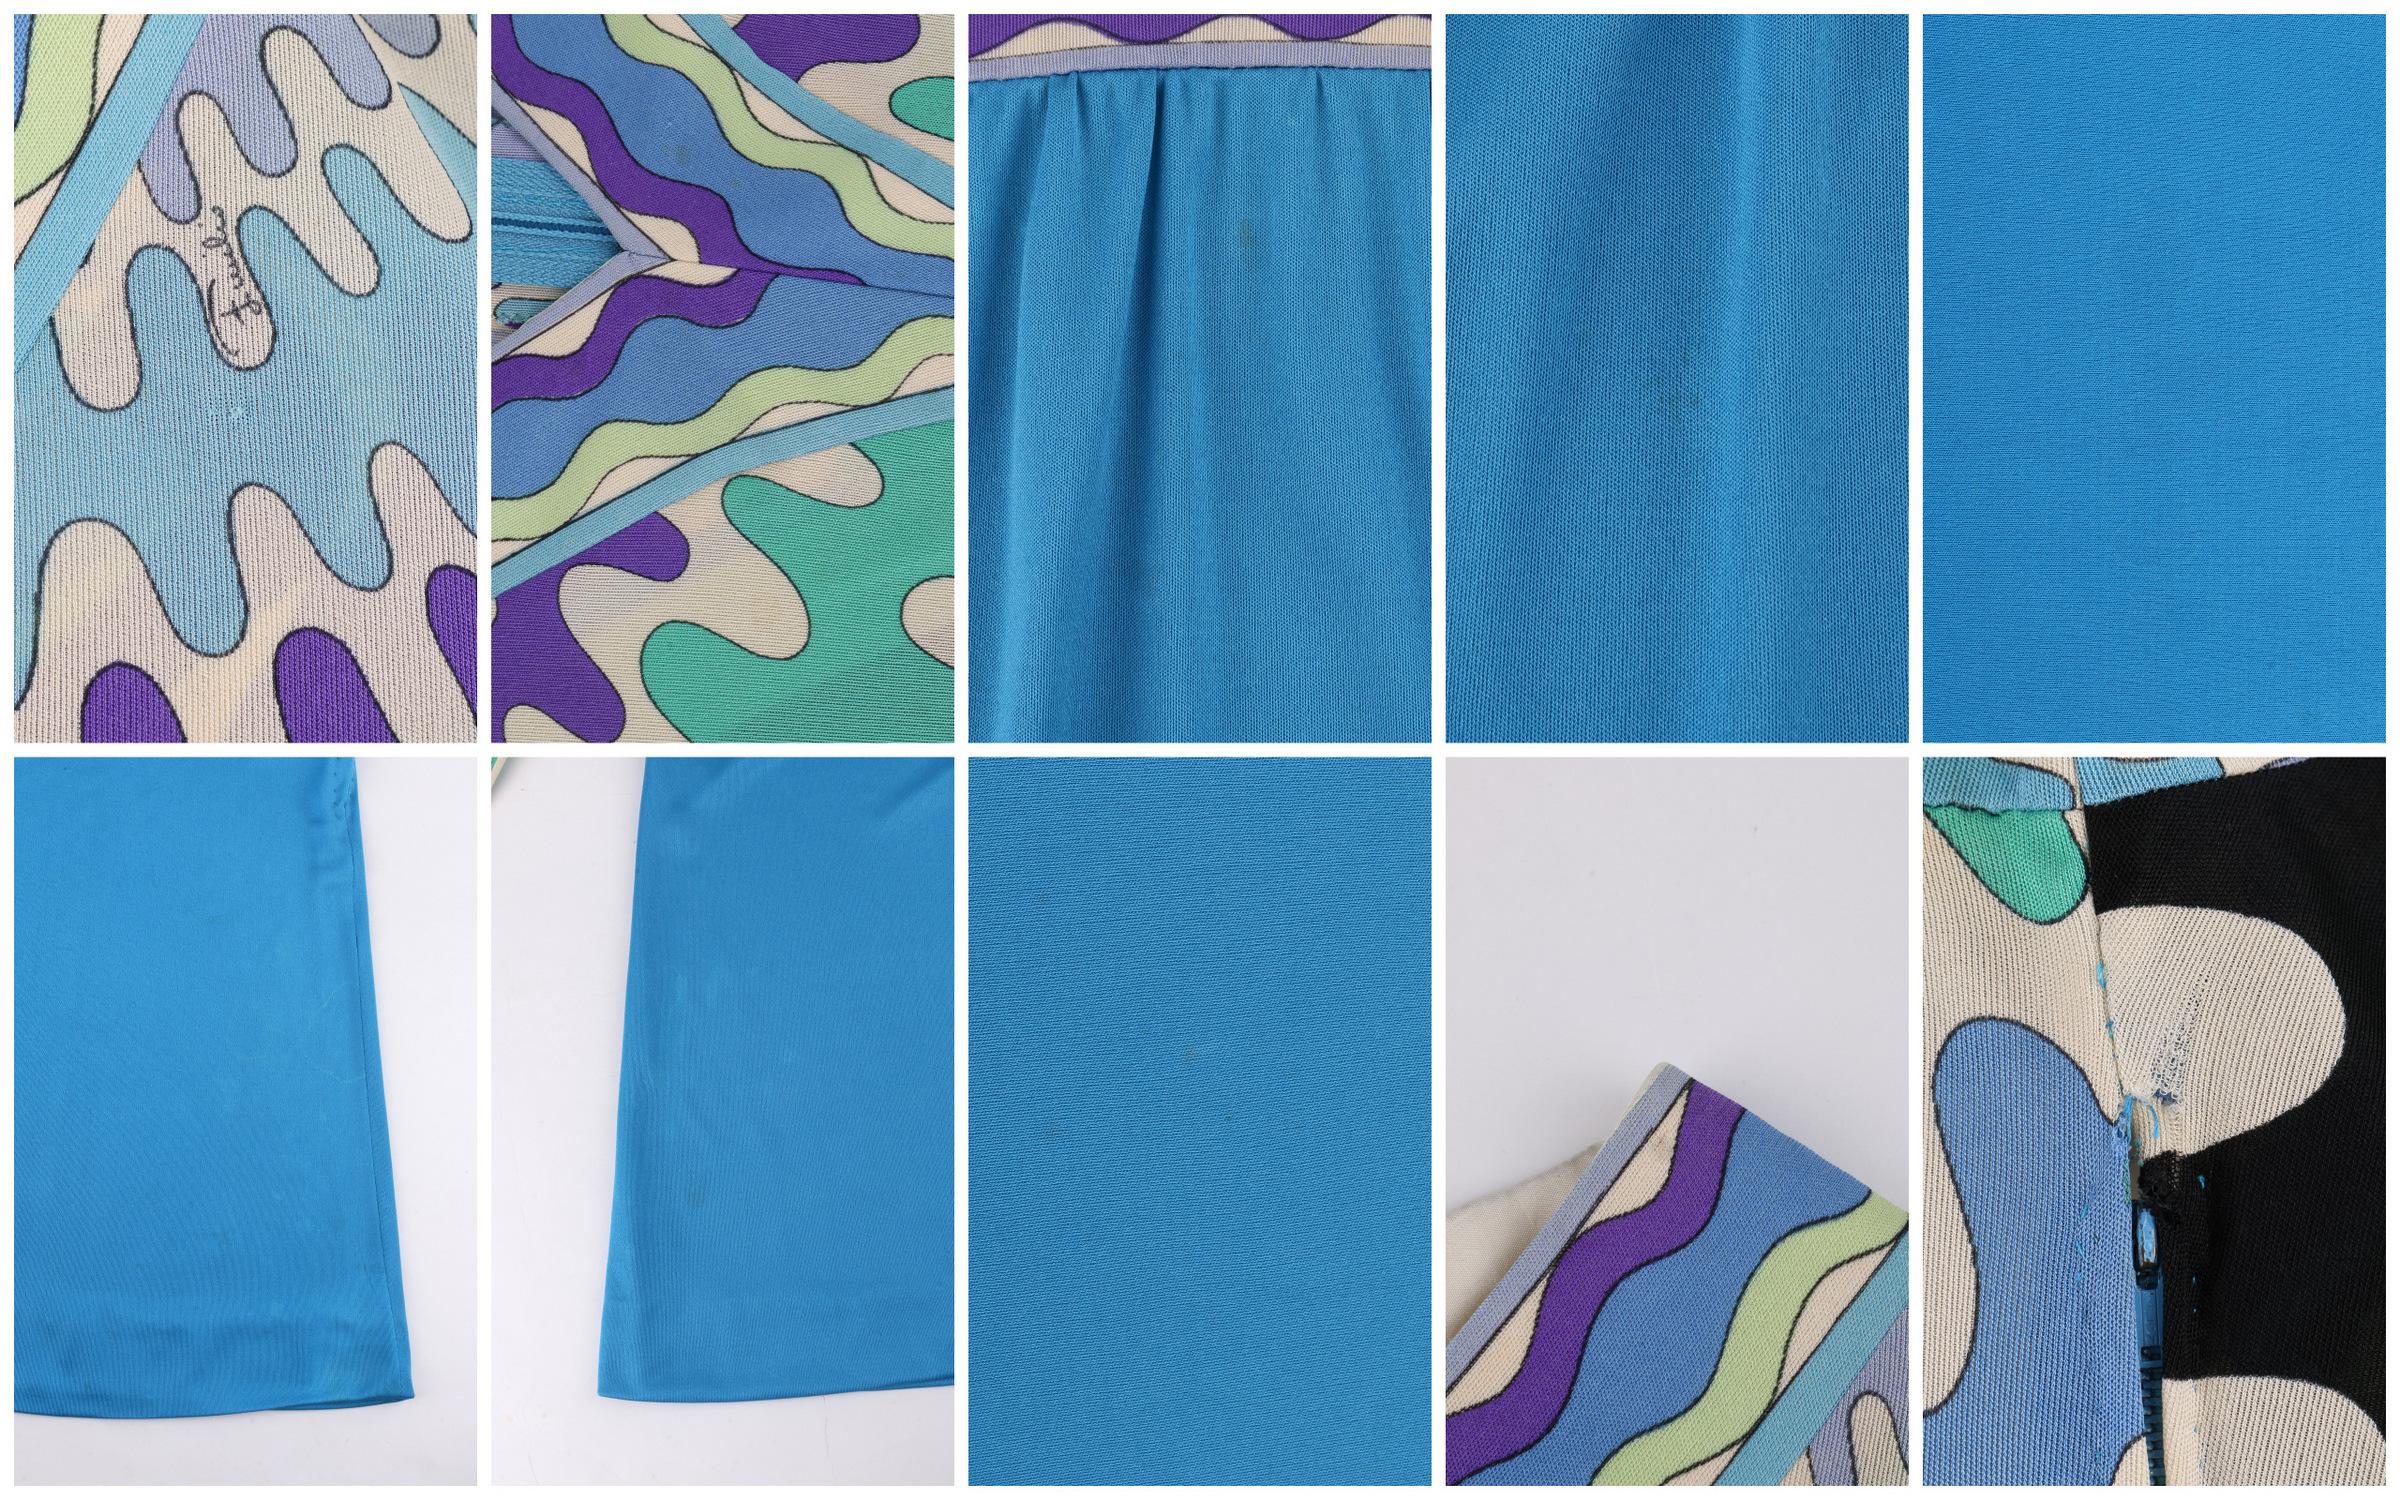 Women's EMILIO PUCCI c.1960's Mod Op Art Signature Print Silk Jersey Knit Shift Dress For Sale